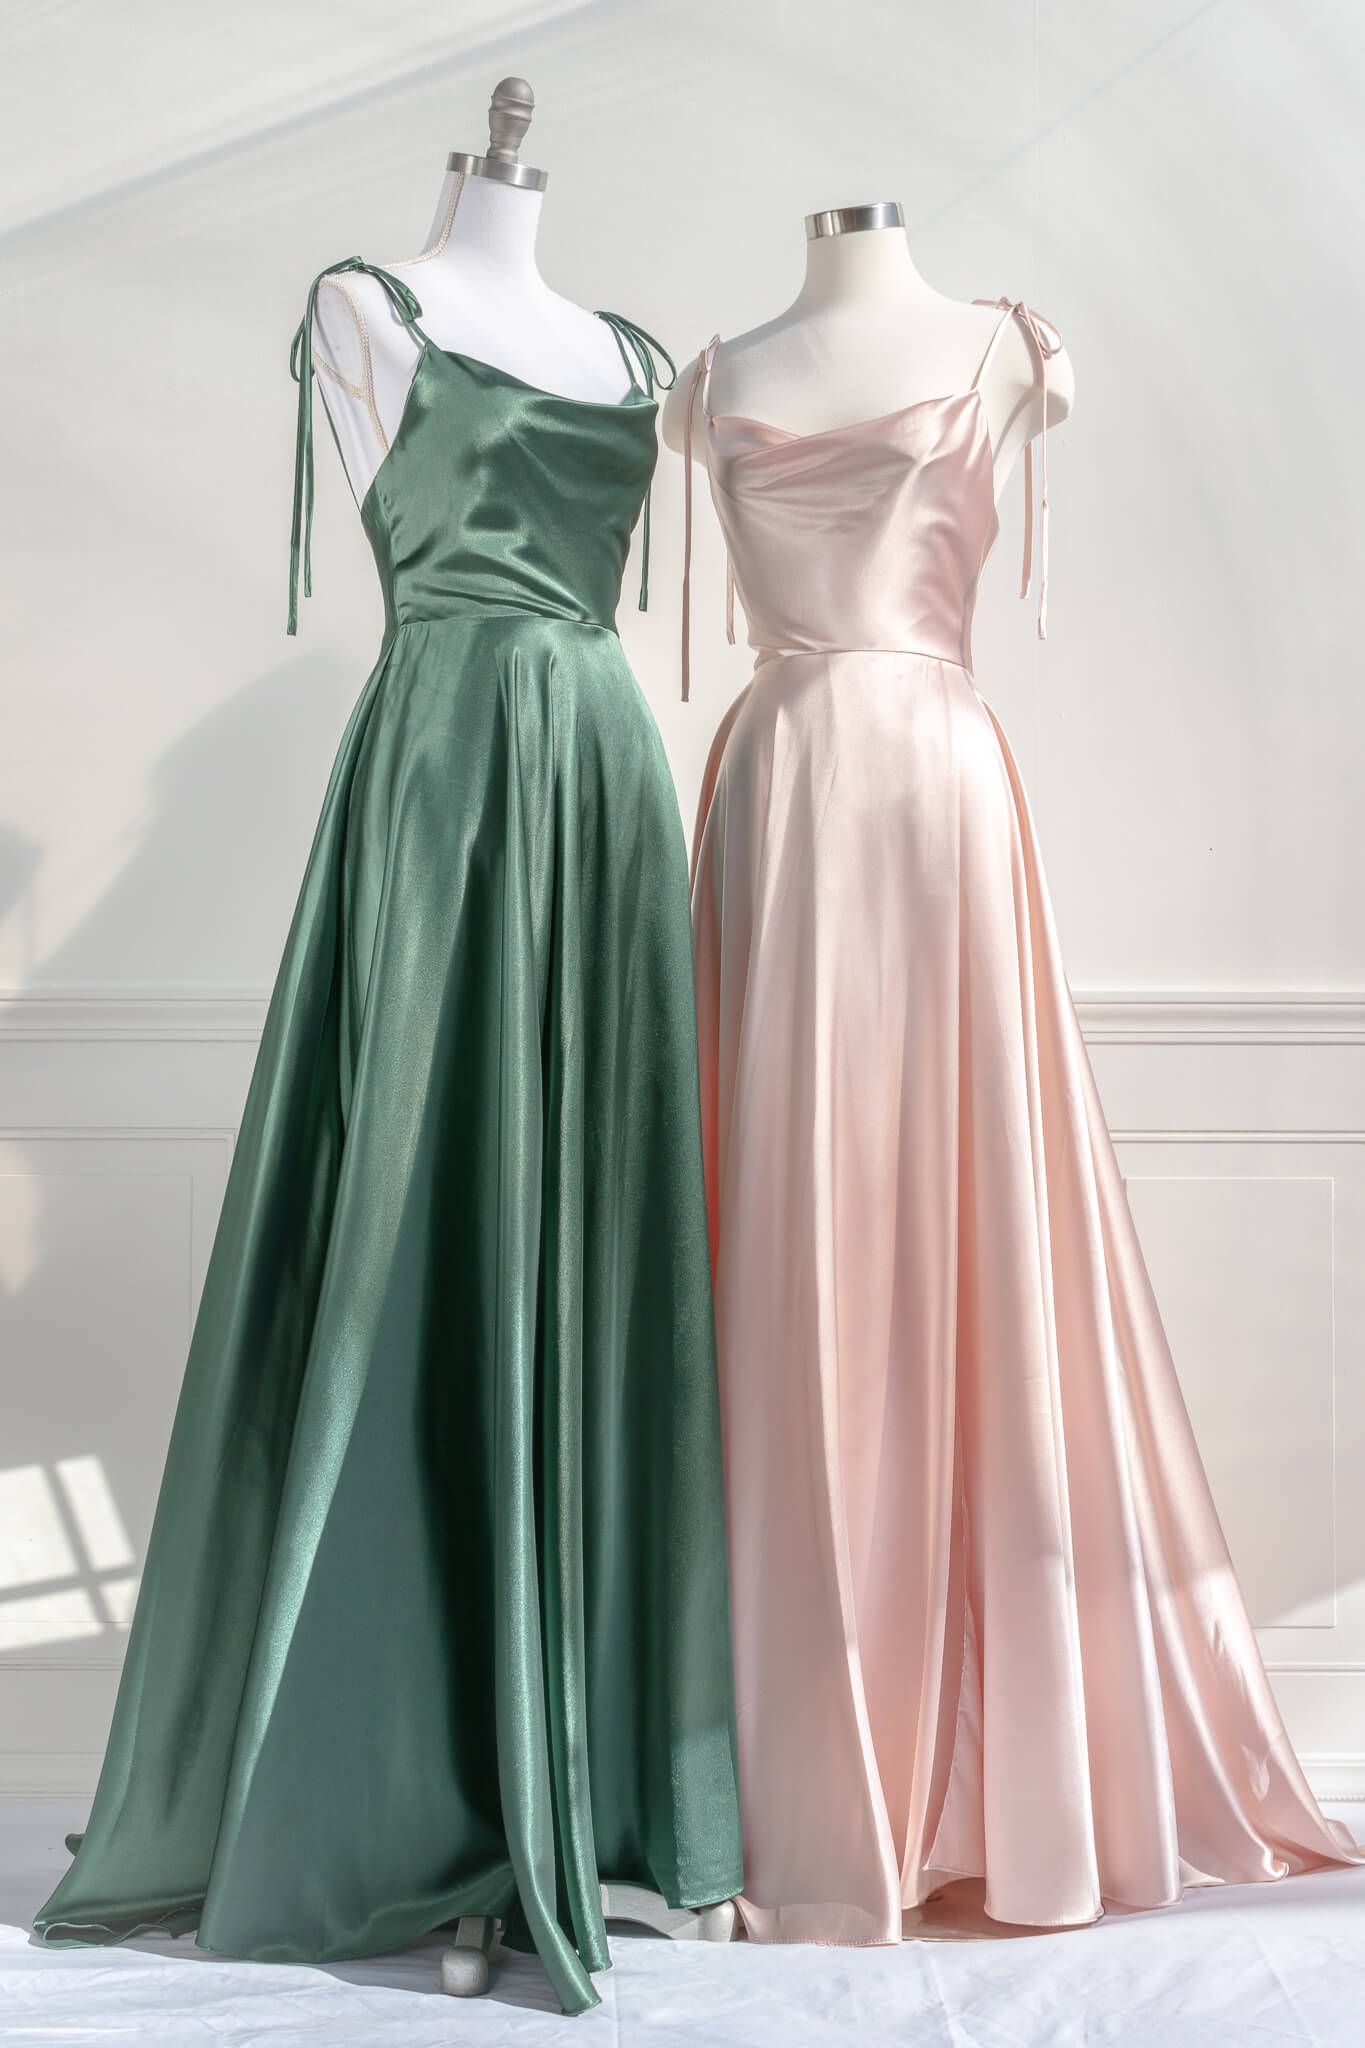 Timeless Sophistication: Elegant Satin Dresses for Every Occasion